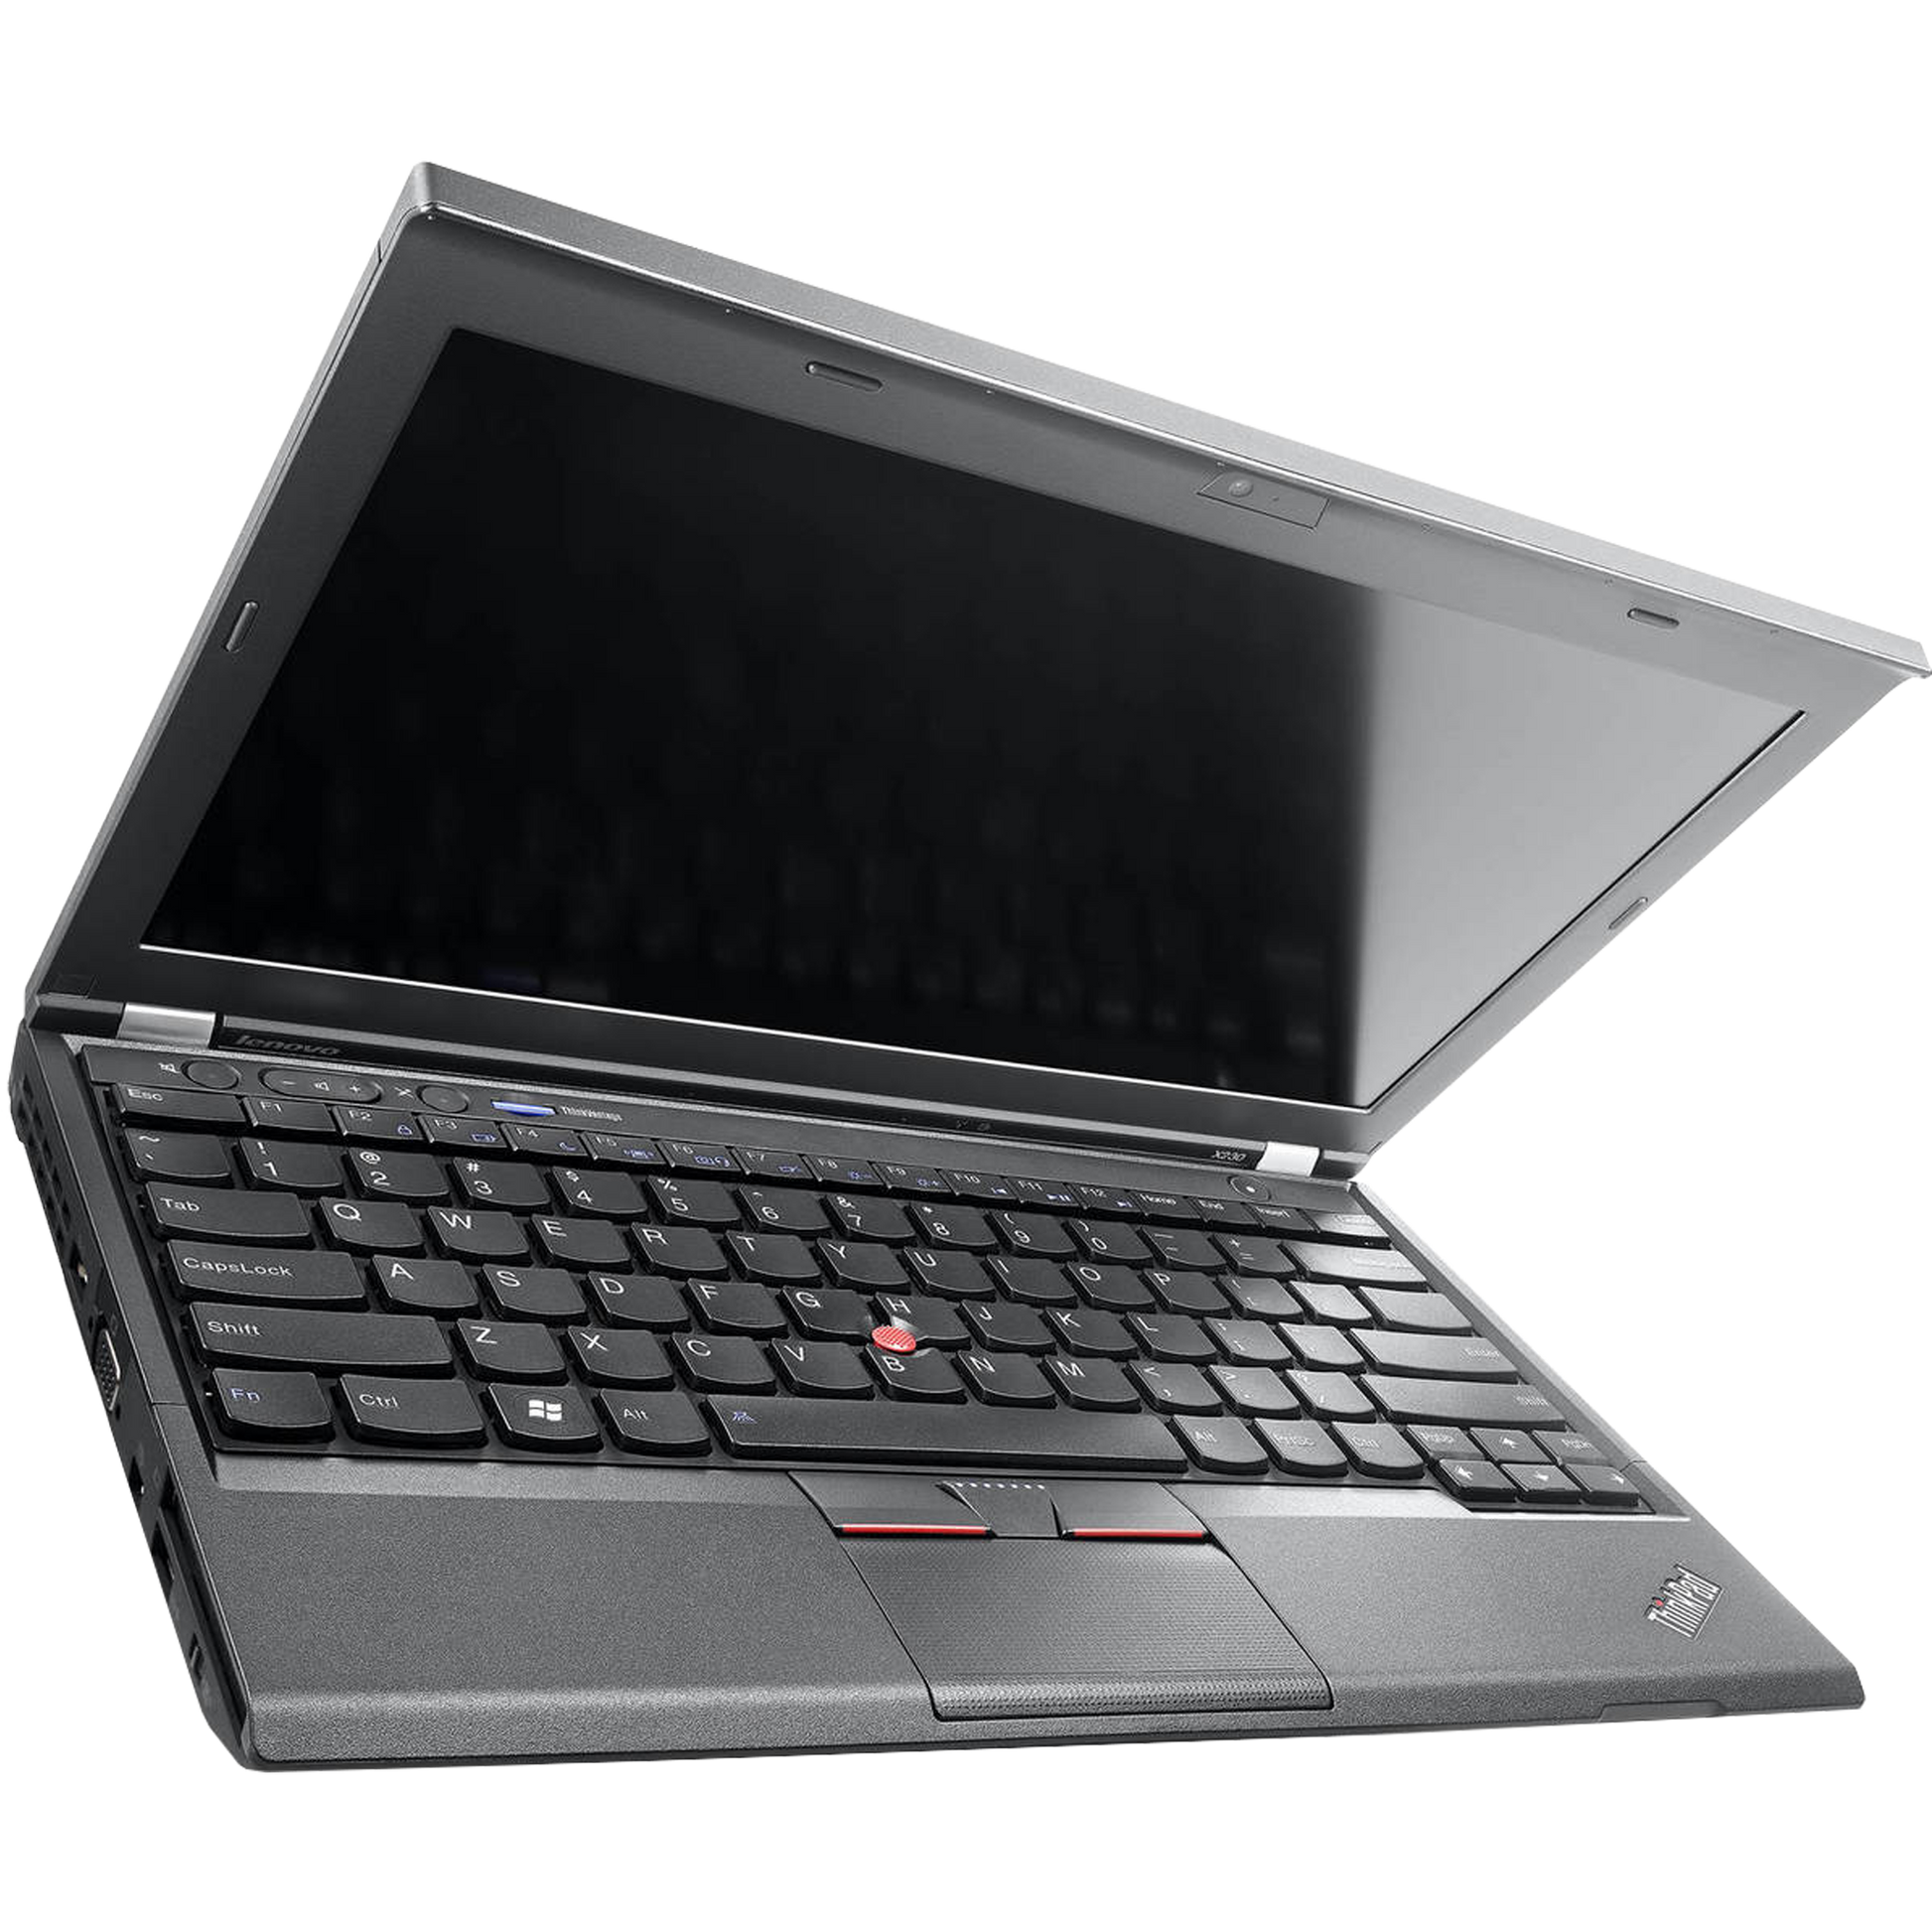 Lenovo ThinkPad X230 Intel i5, 3rd Gen Laptop with 8GB Ram Laptops - Refurbished